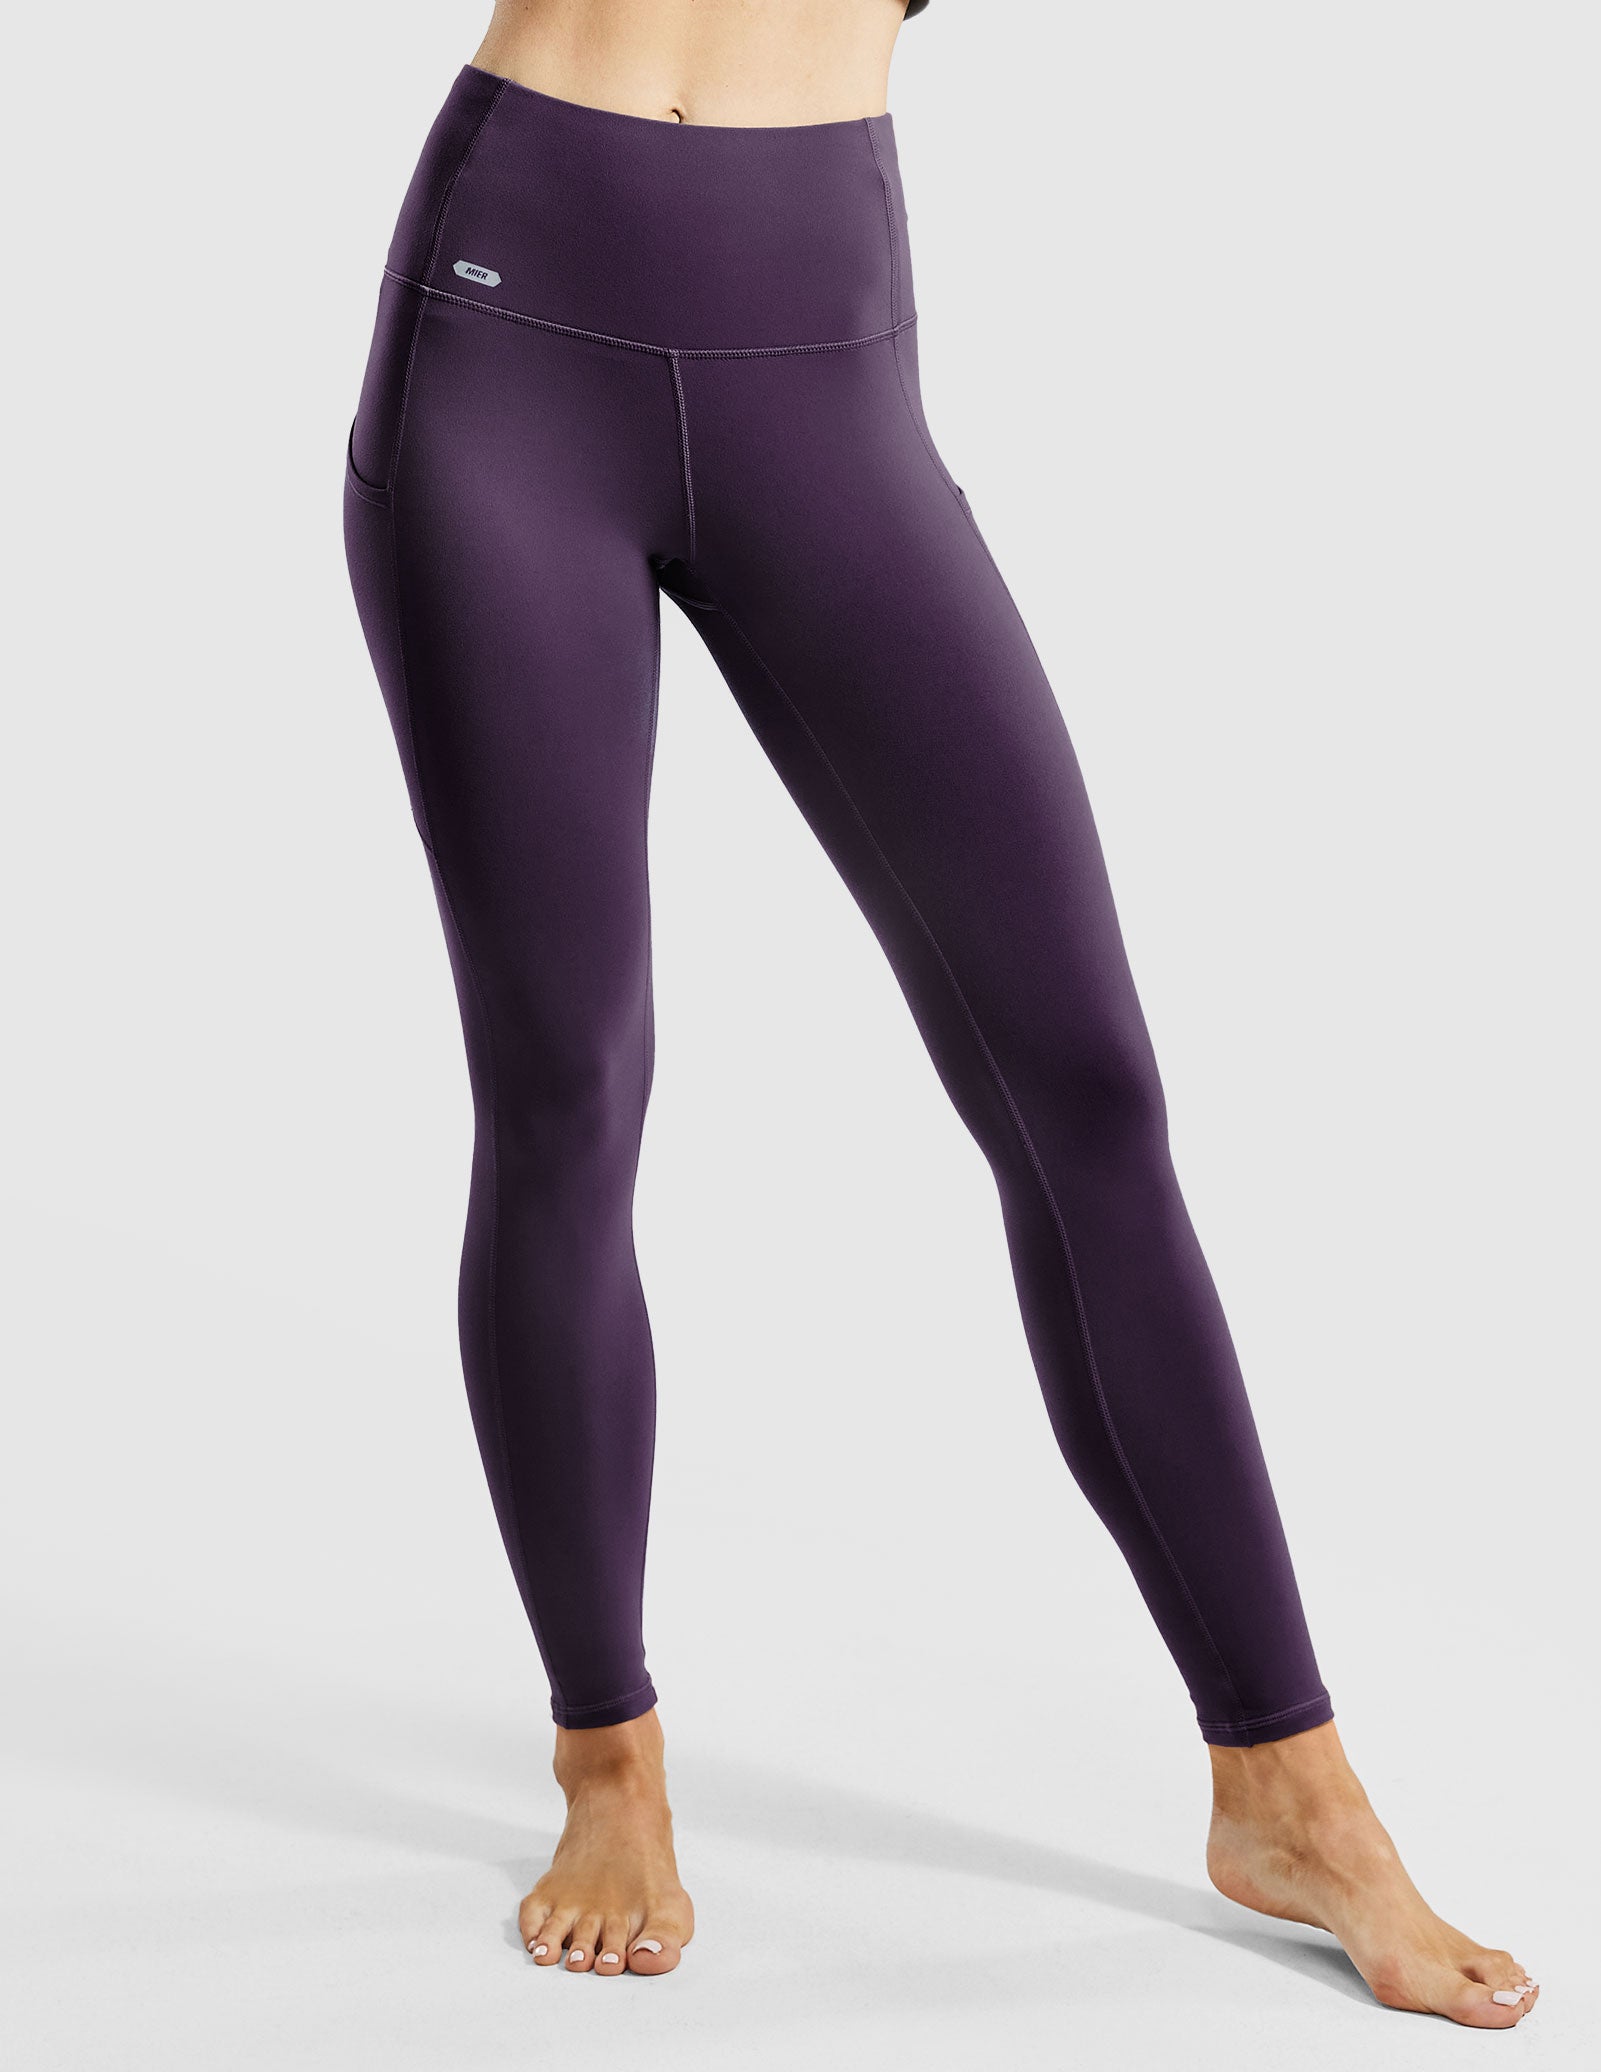 Women's High Waisted Yoga Leggings Workout Pants - Deep Purple / S